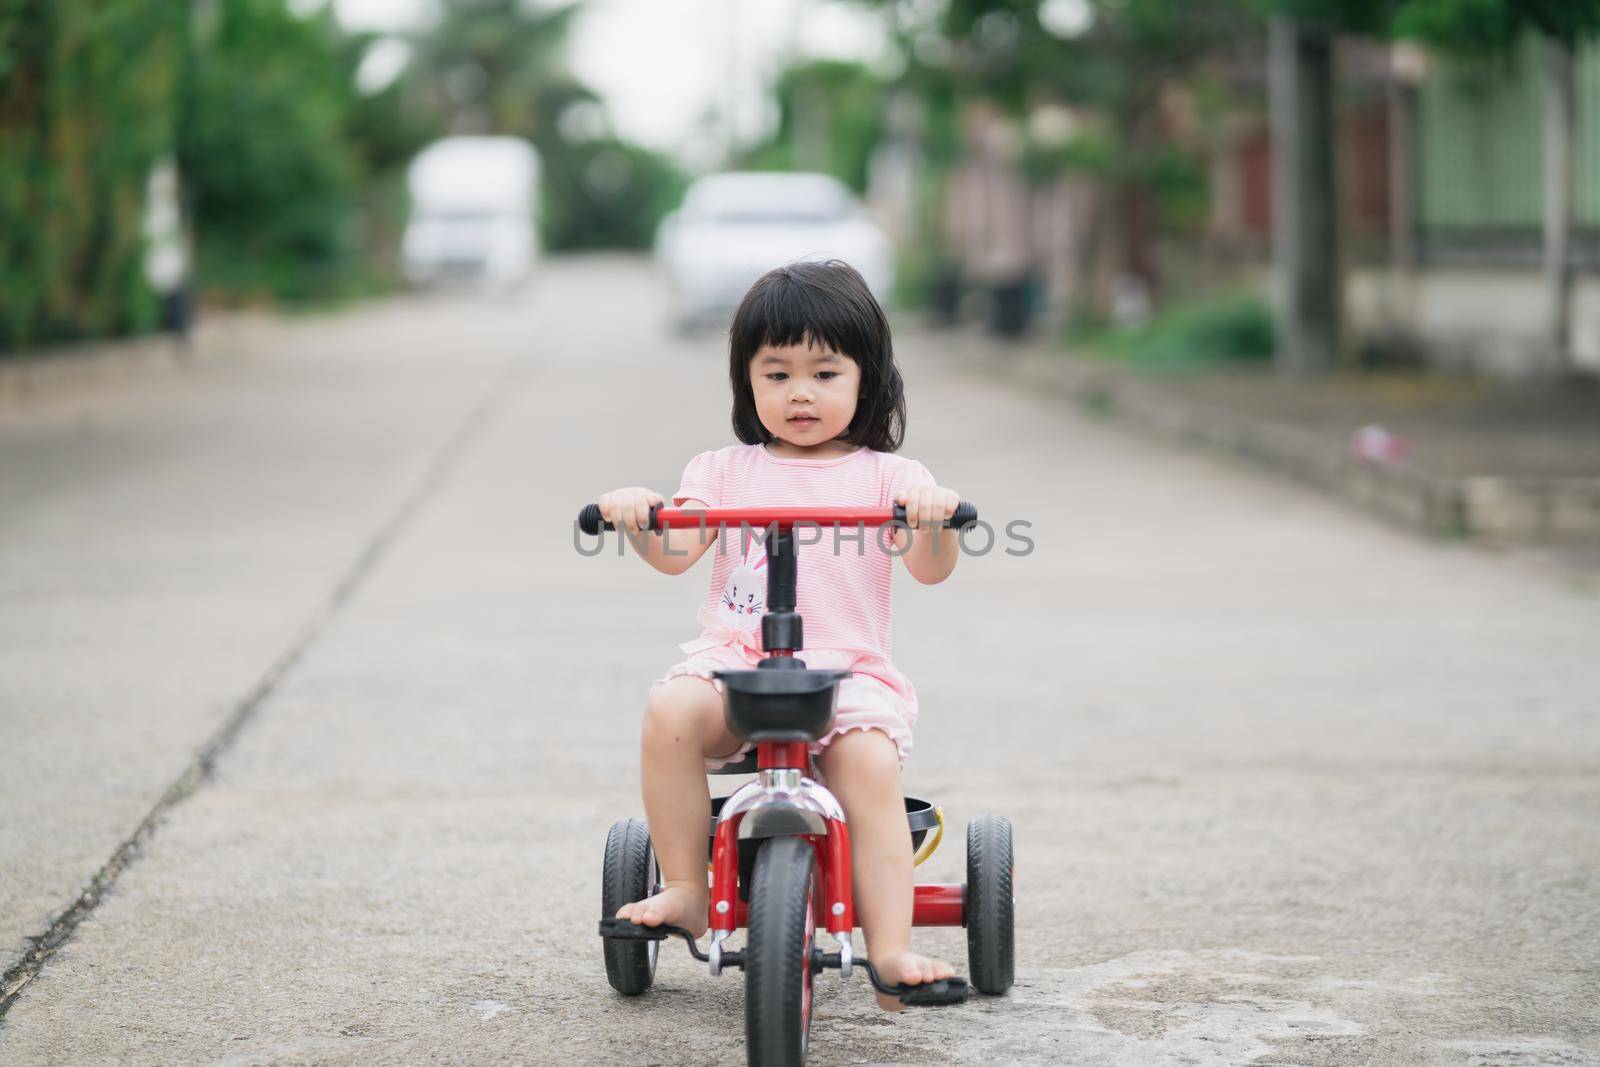 Cute children riding a bike. Kids enjoying a bicycle ride. by Wmpix